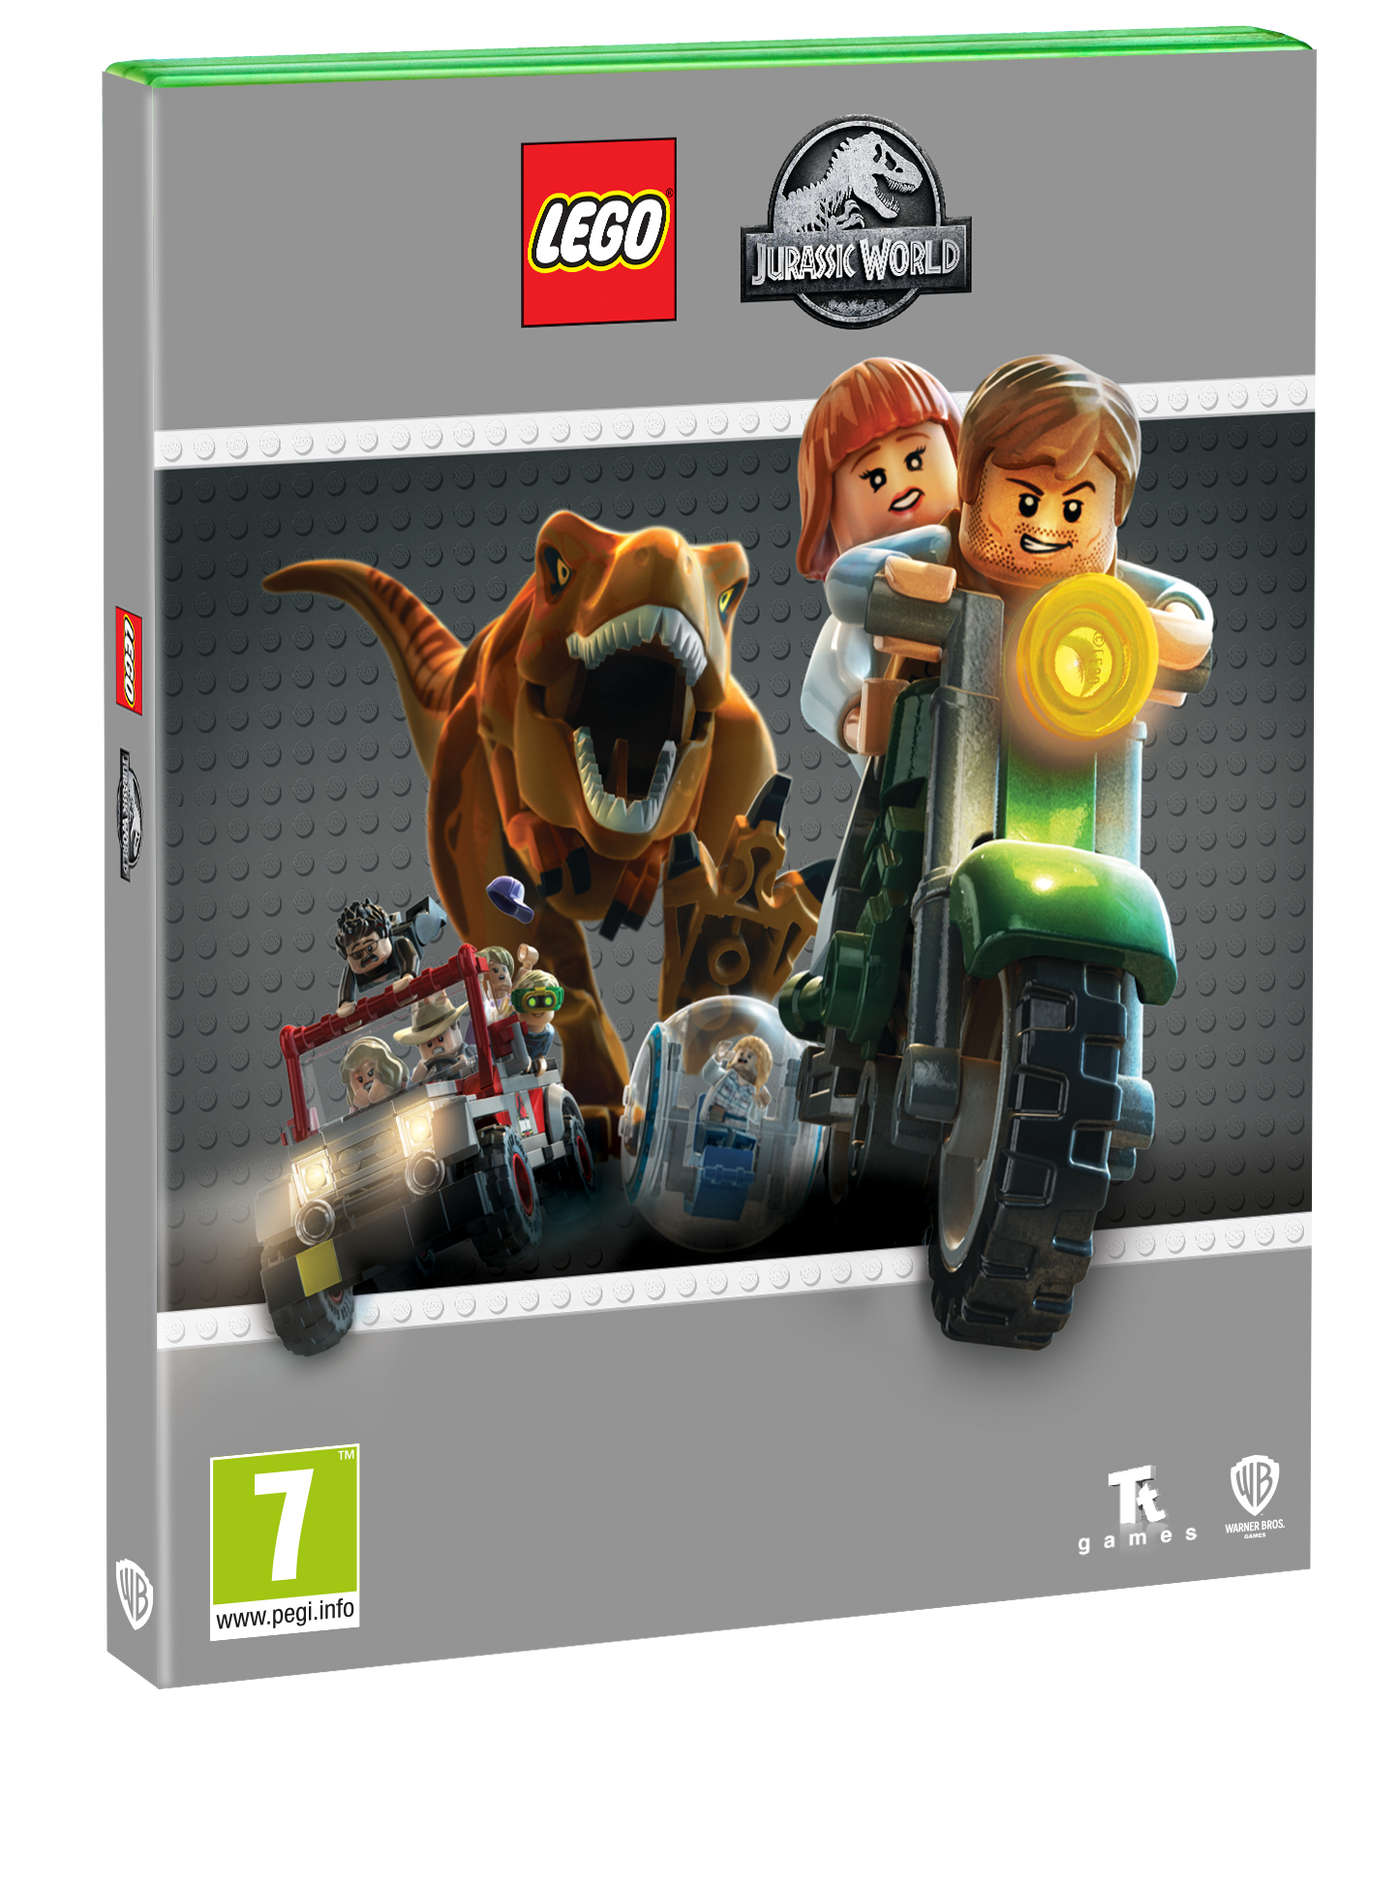 LEGO Jurassic World Video Game (Xbox One)